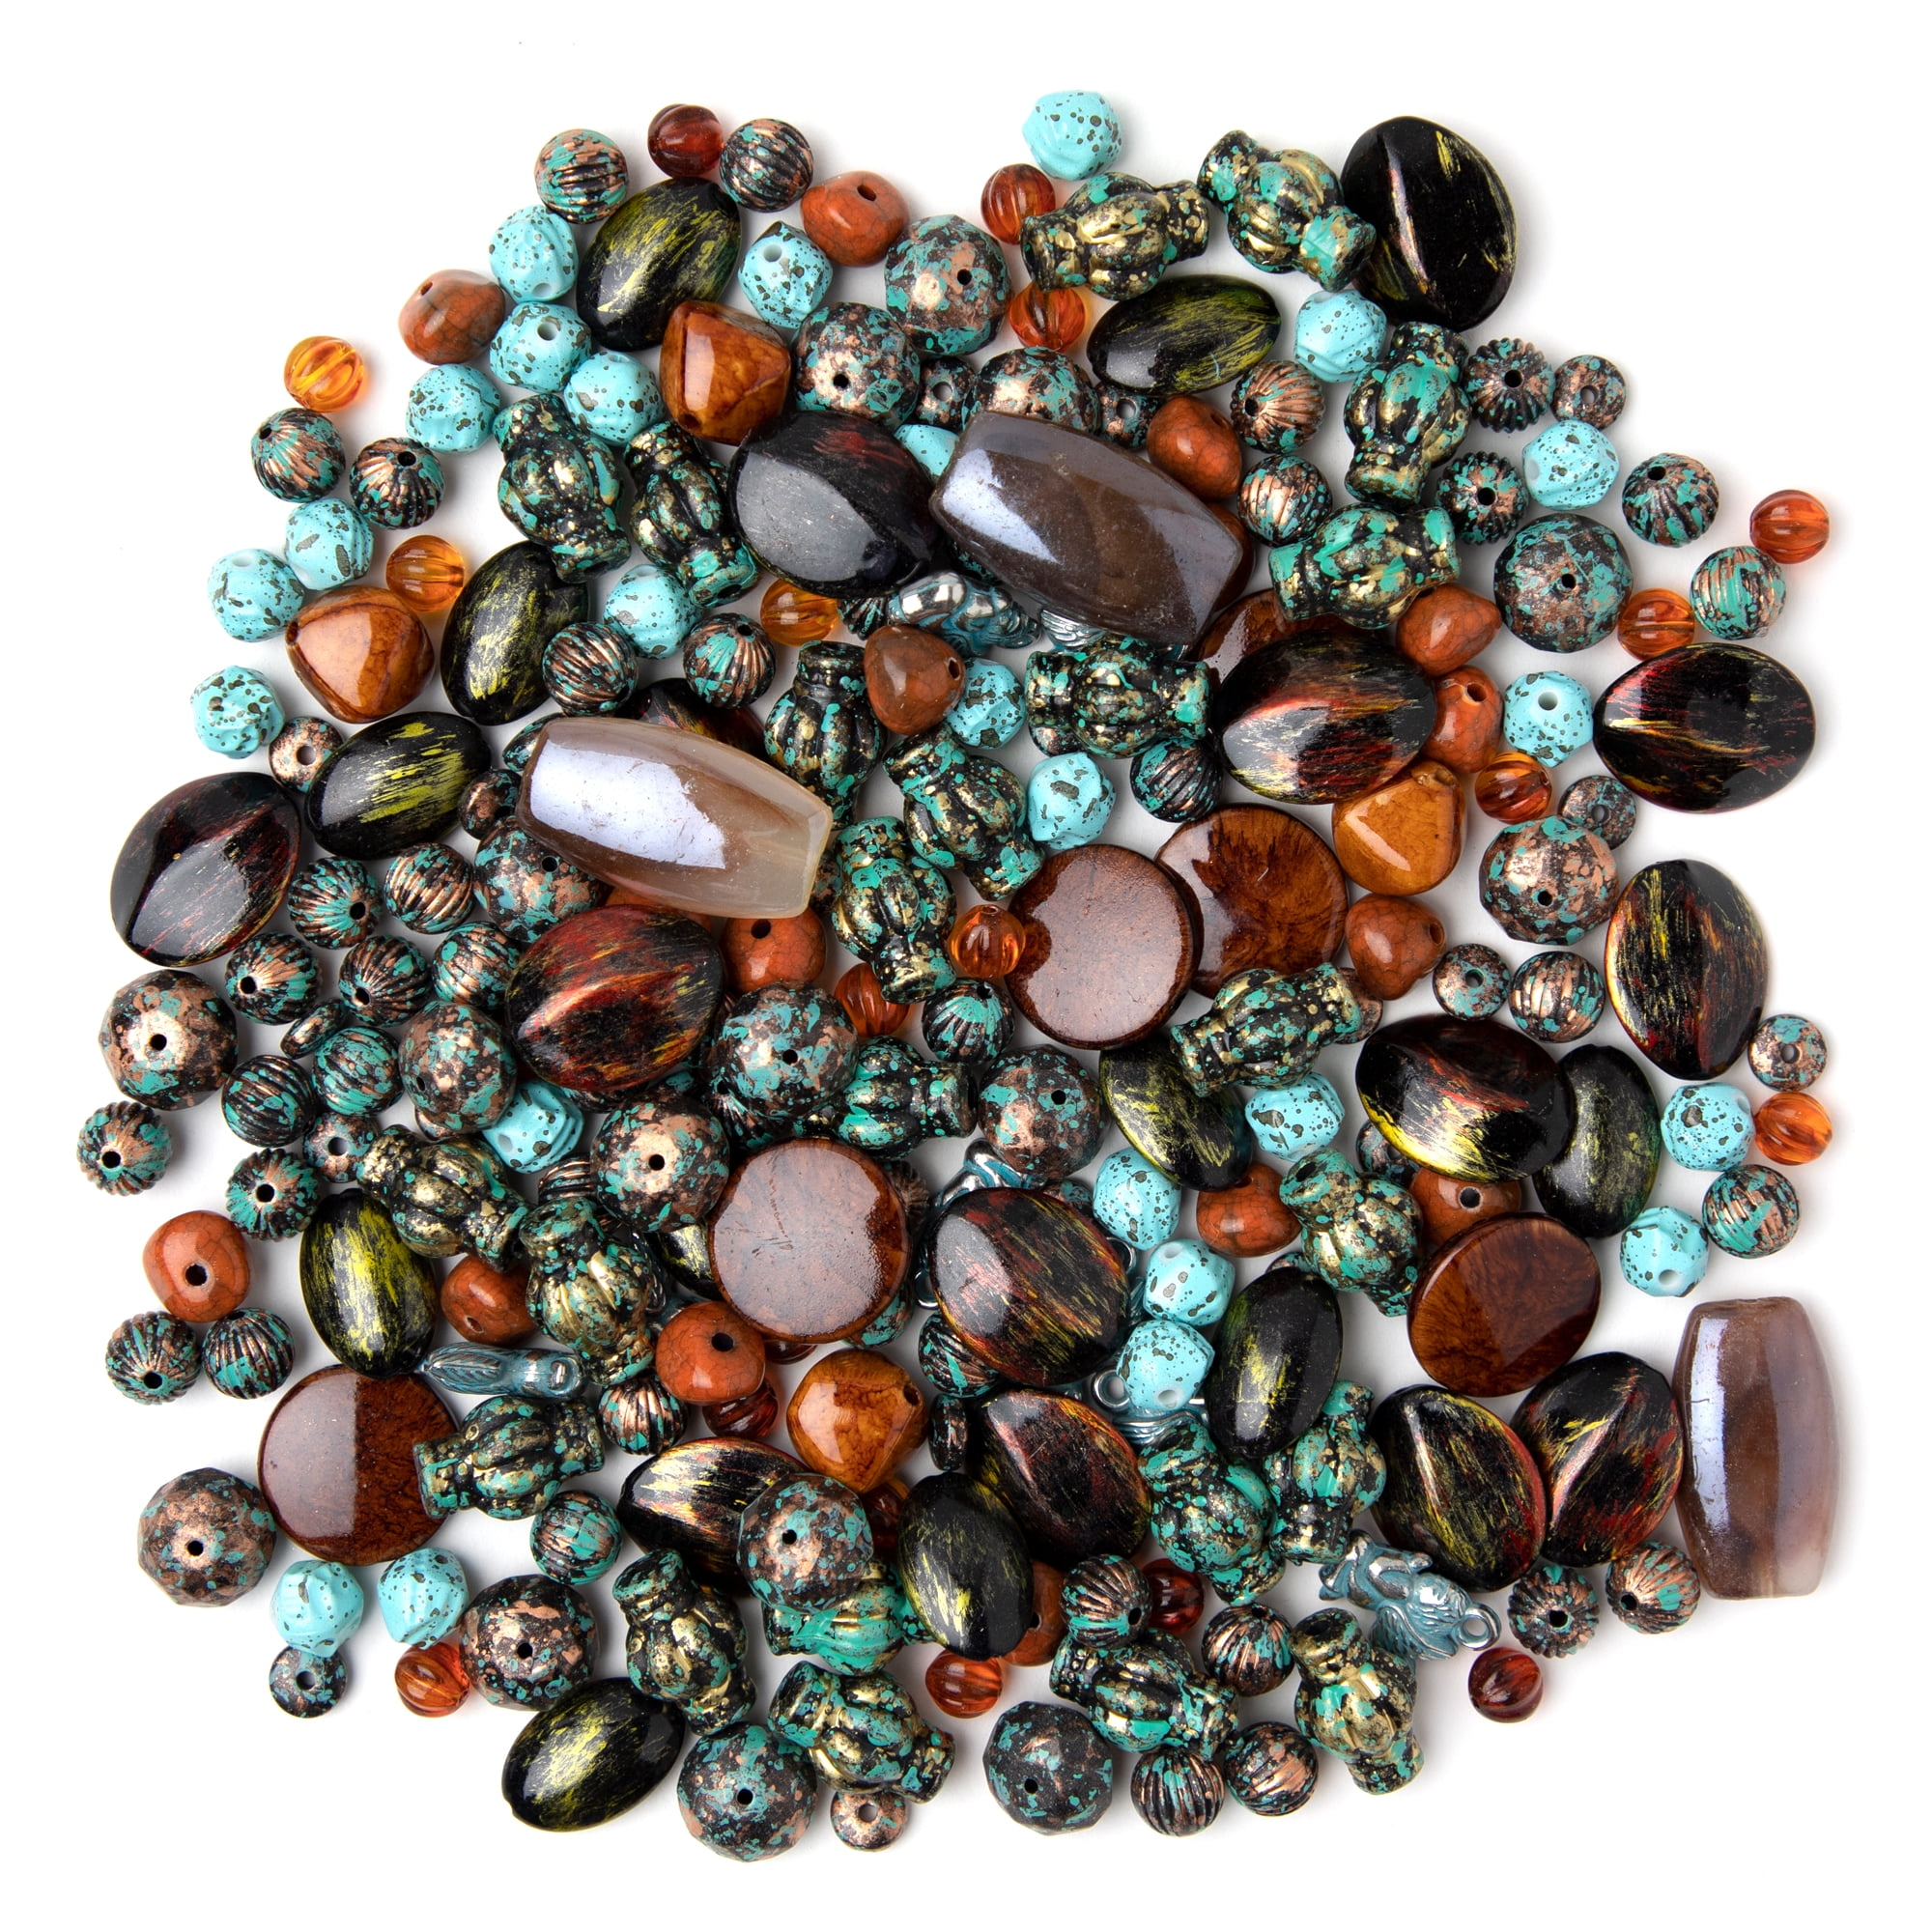 Pcs AB Art Hobby DIY Jewellery Making Crafts Clear Acrylic Star Beads 10mm 100 